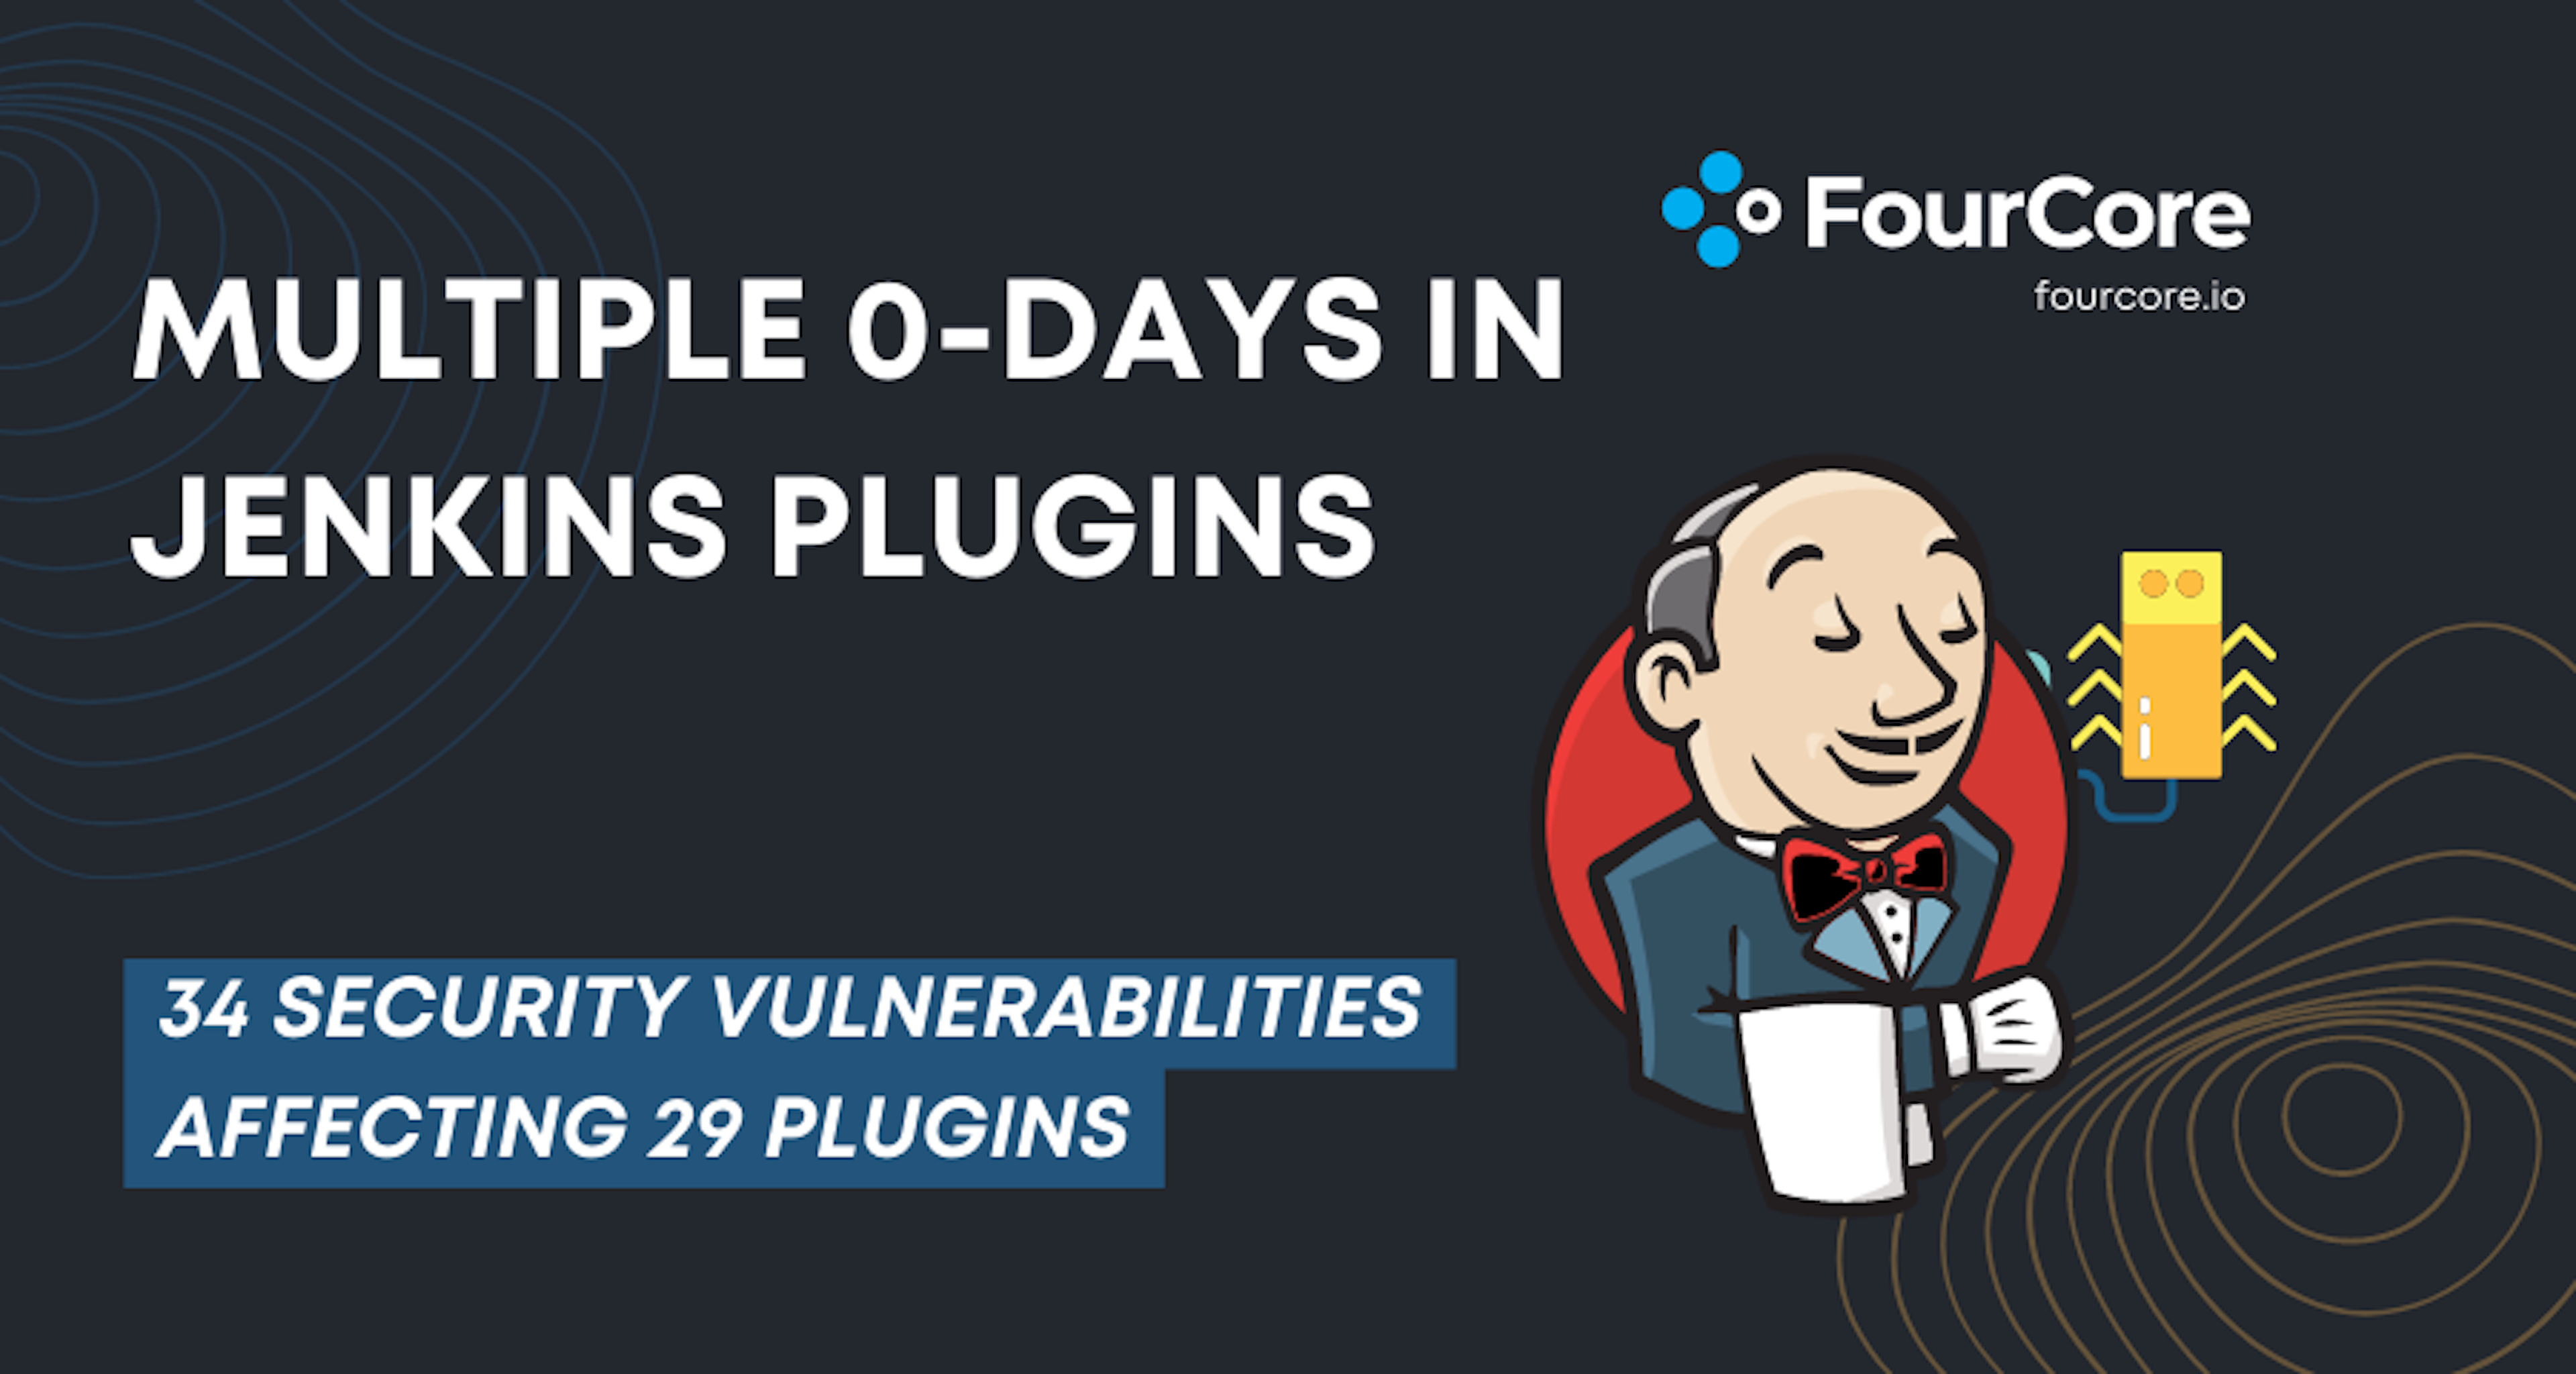 Jenkins discloses zero-day vulnerabilities affecting dozens of plugins Blog Post Image